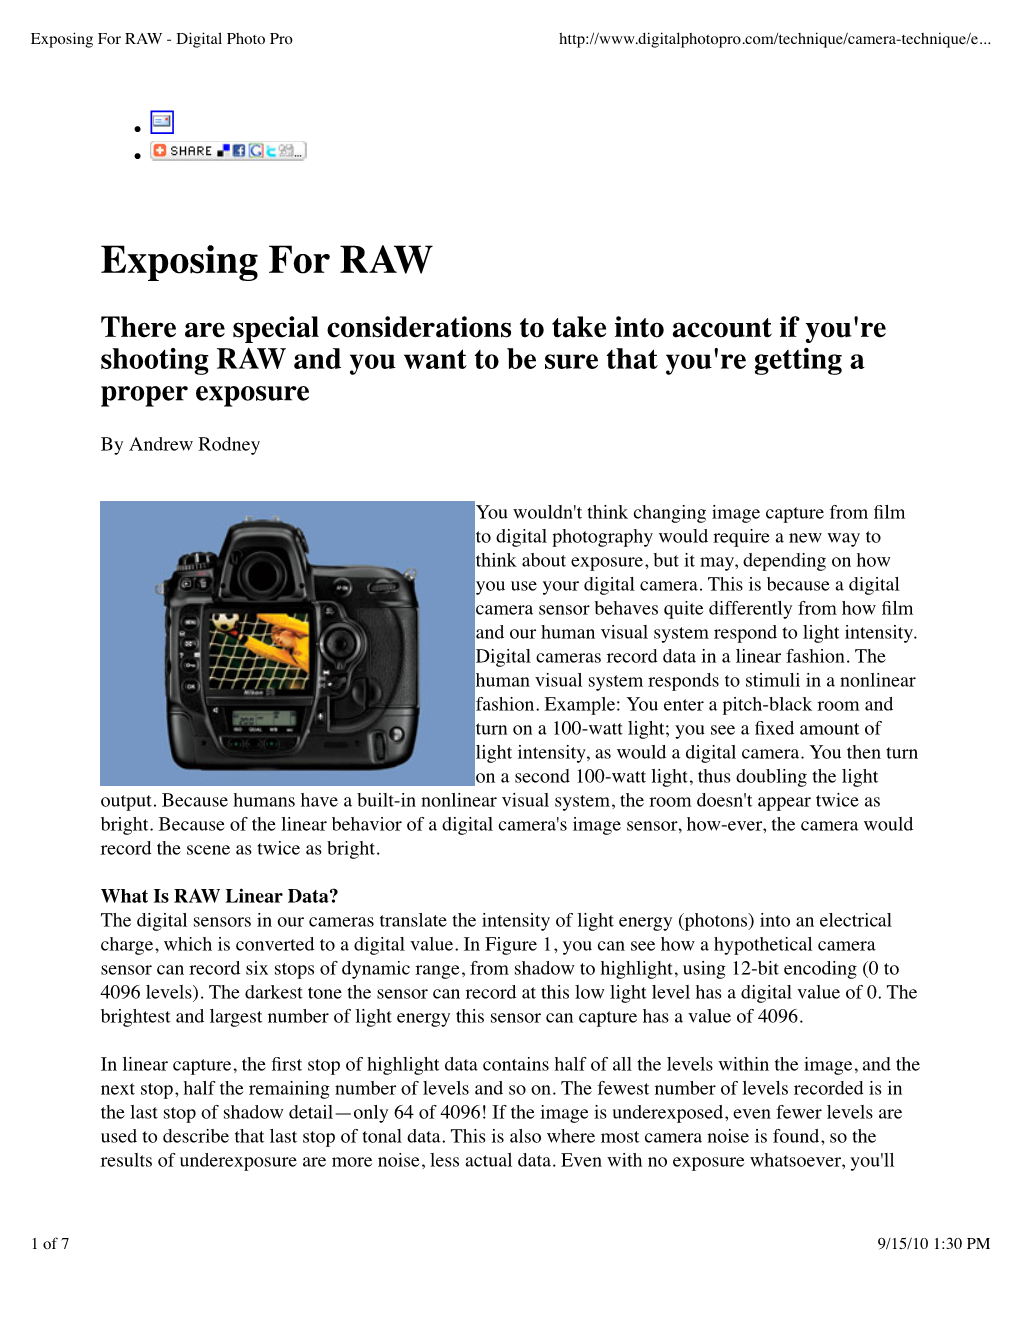 Exposing for RAW - Digital Photo Pro